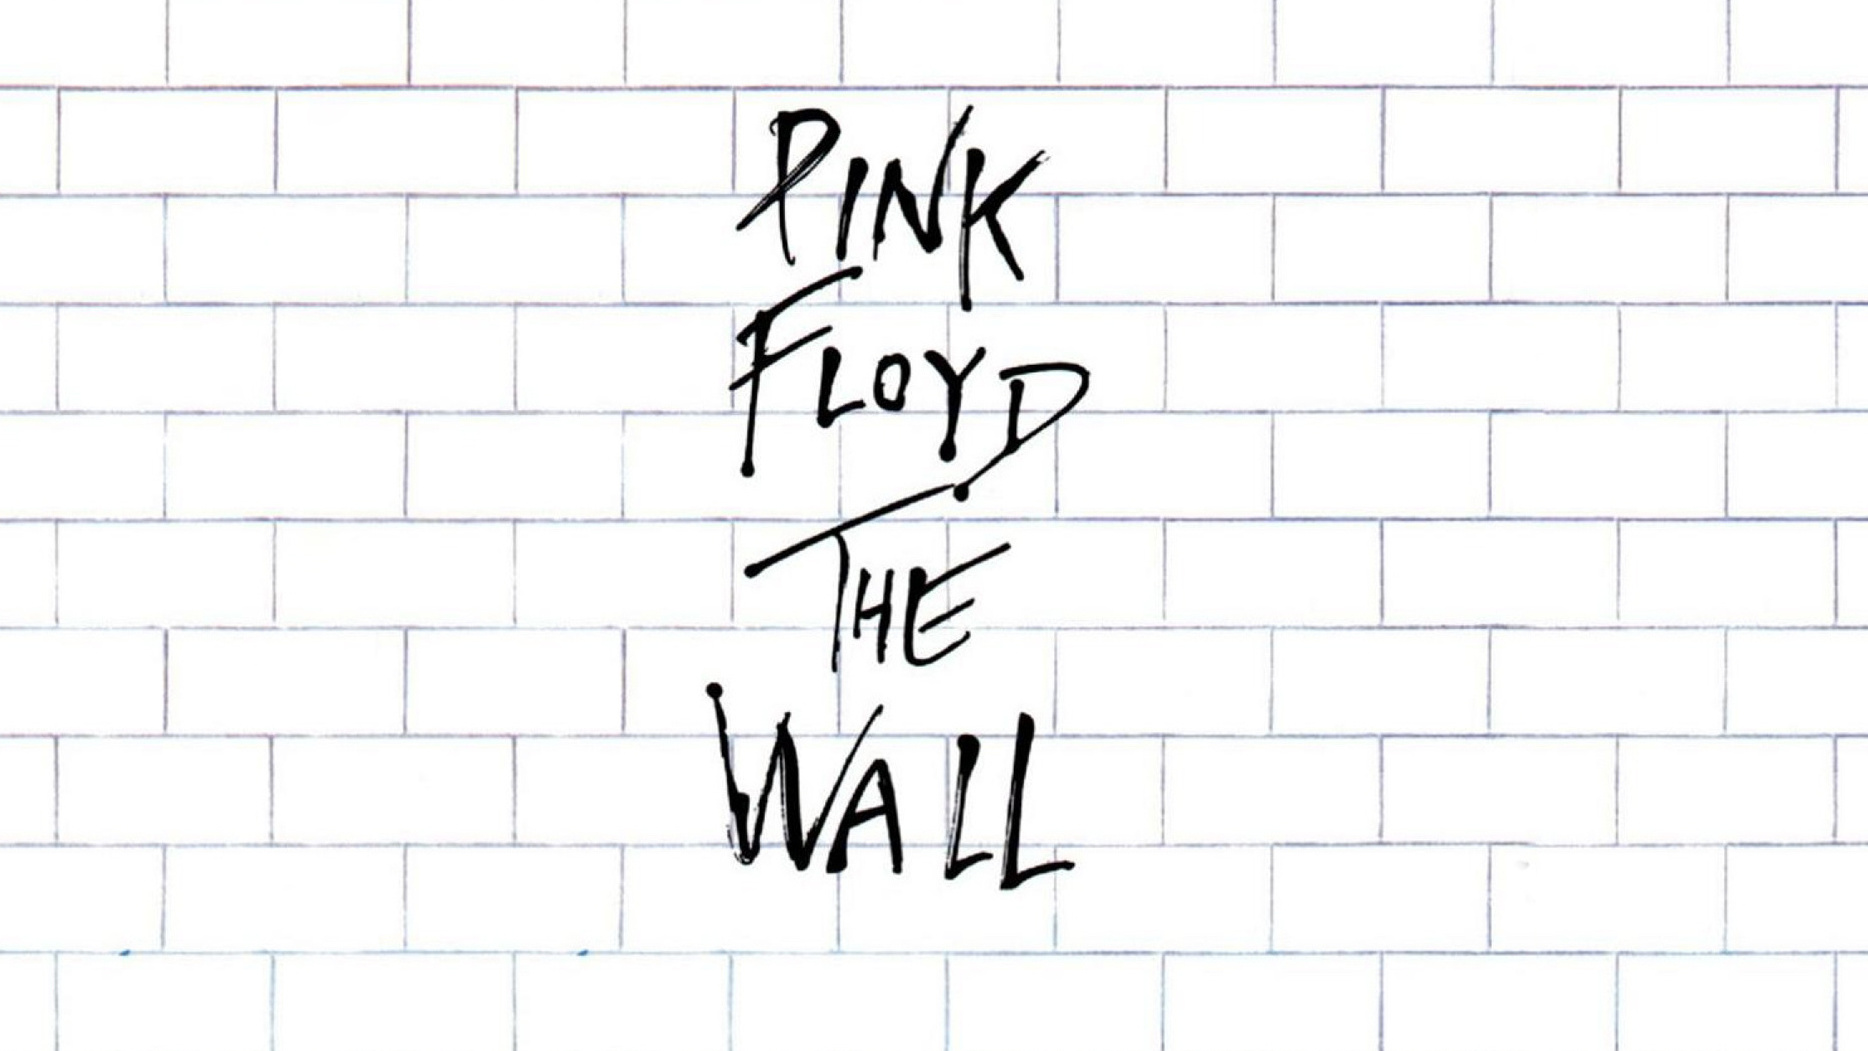 pink floyd the wall album art genius